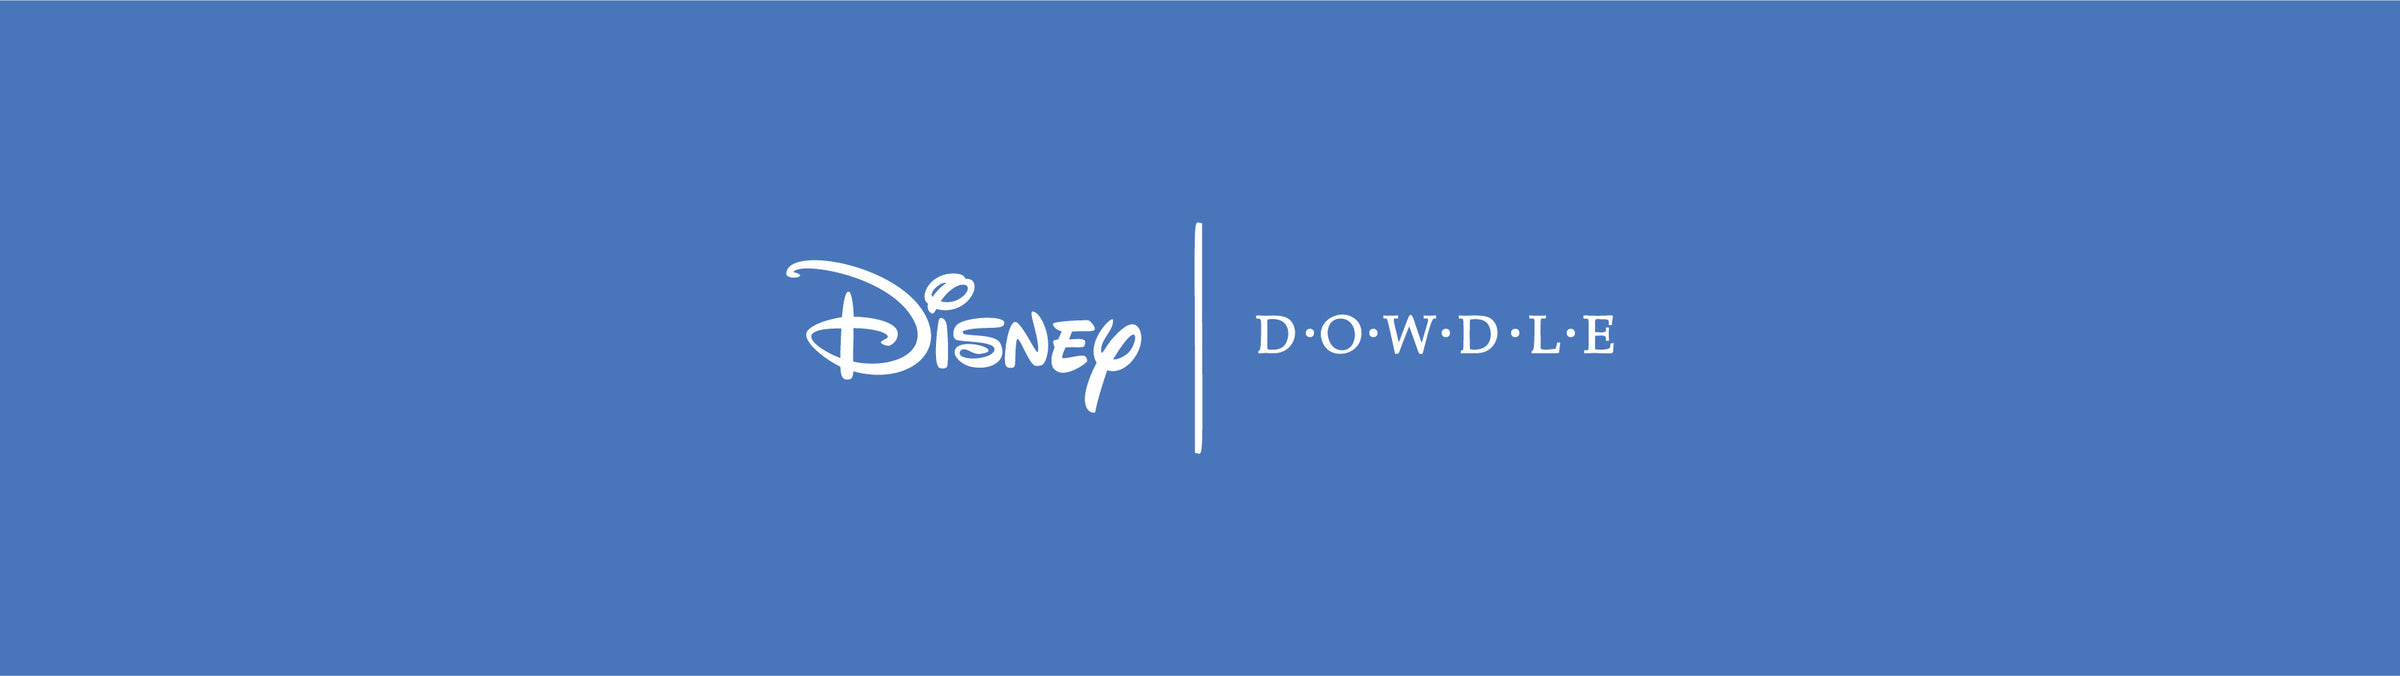 Disney | Dowdle